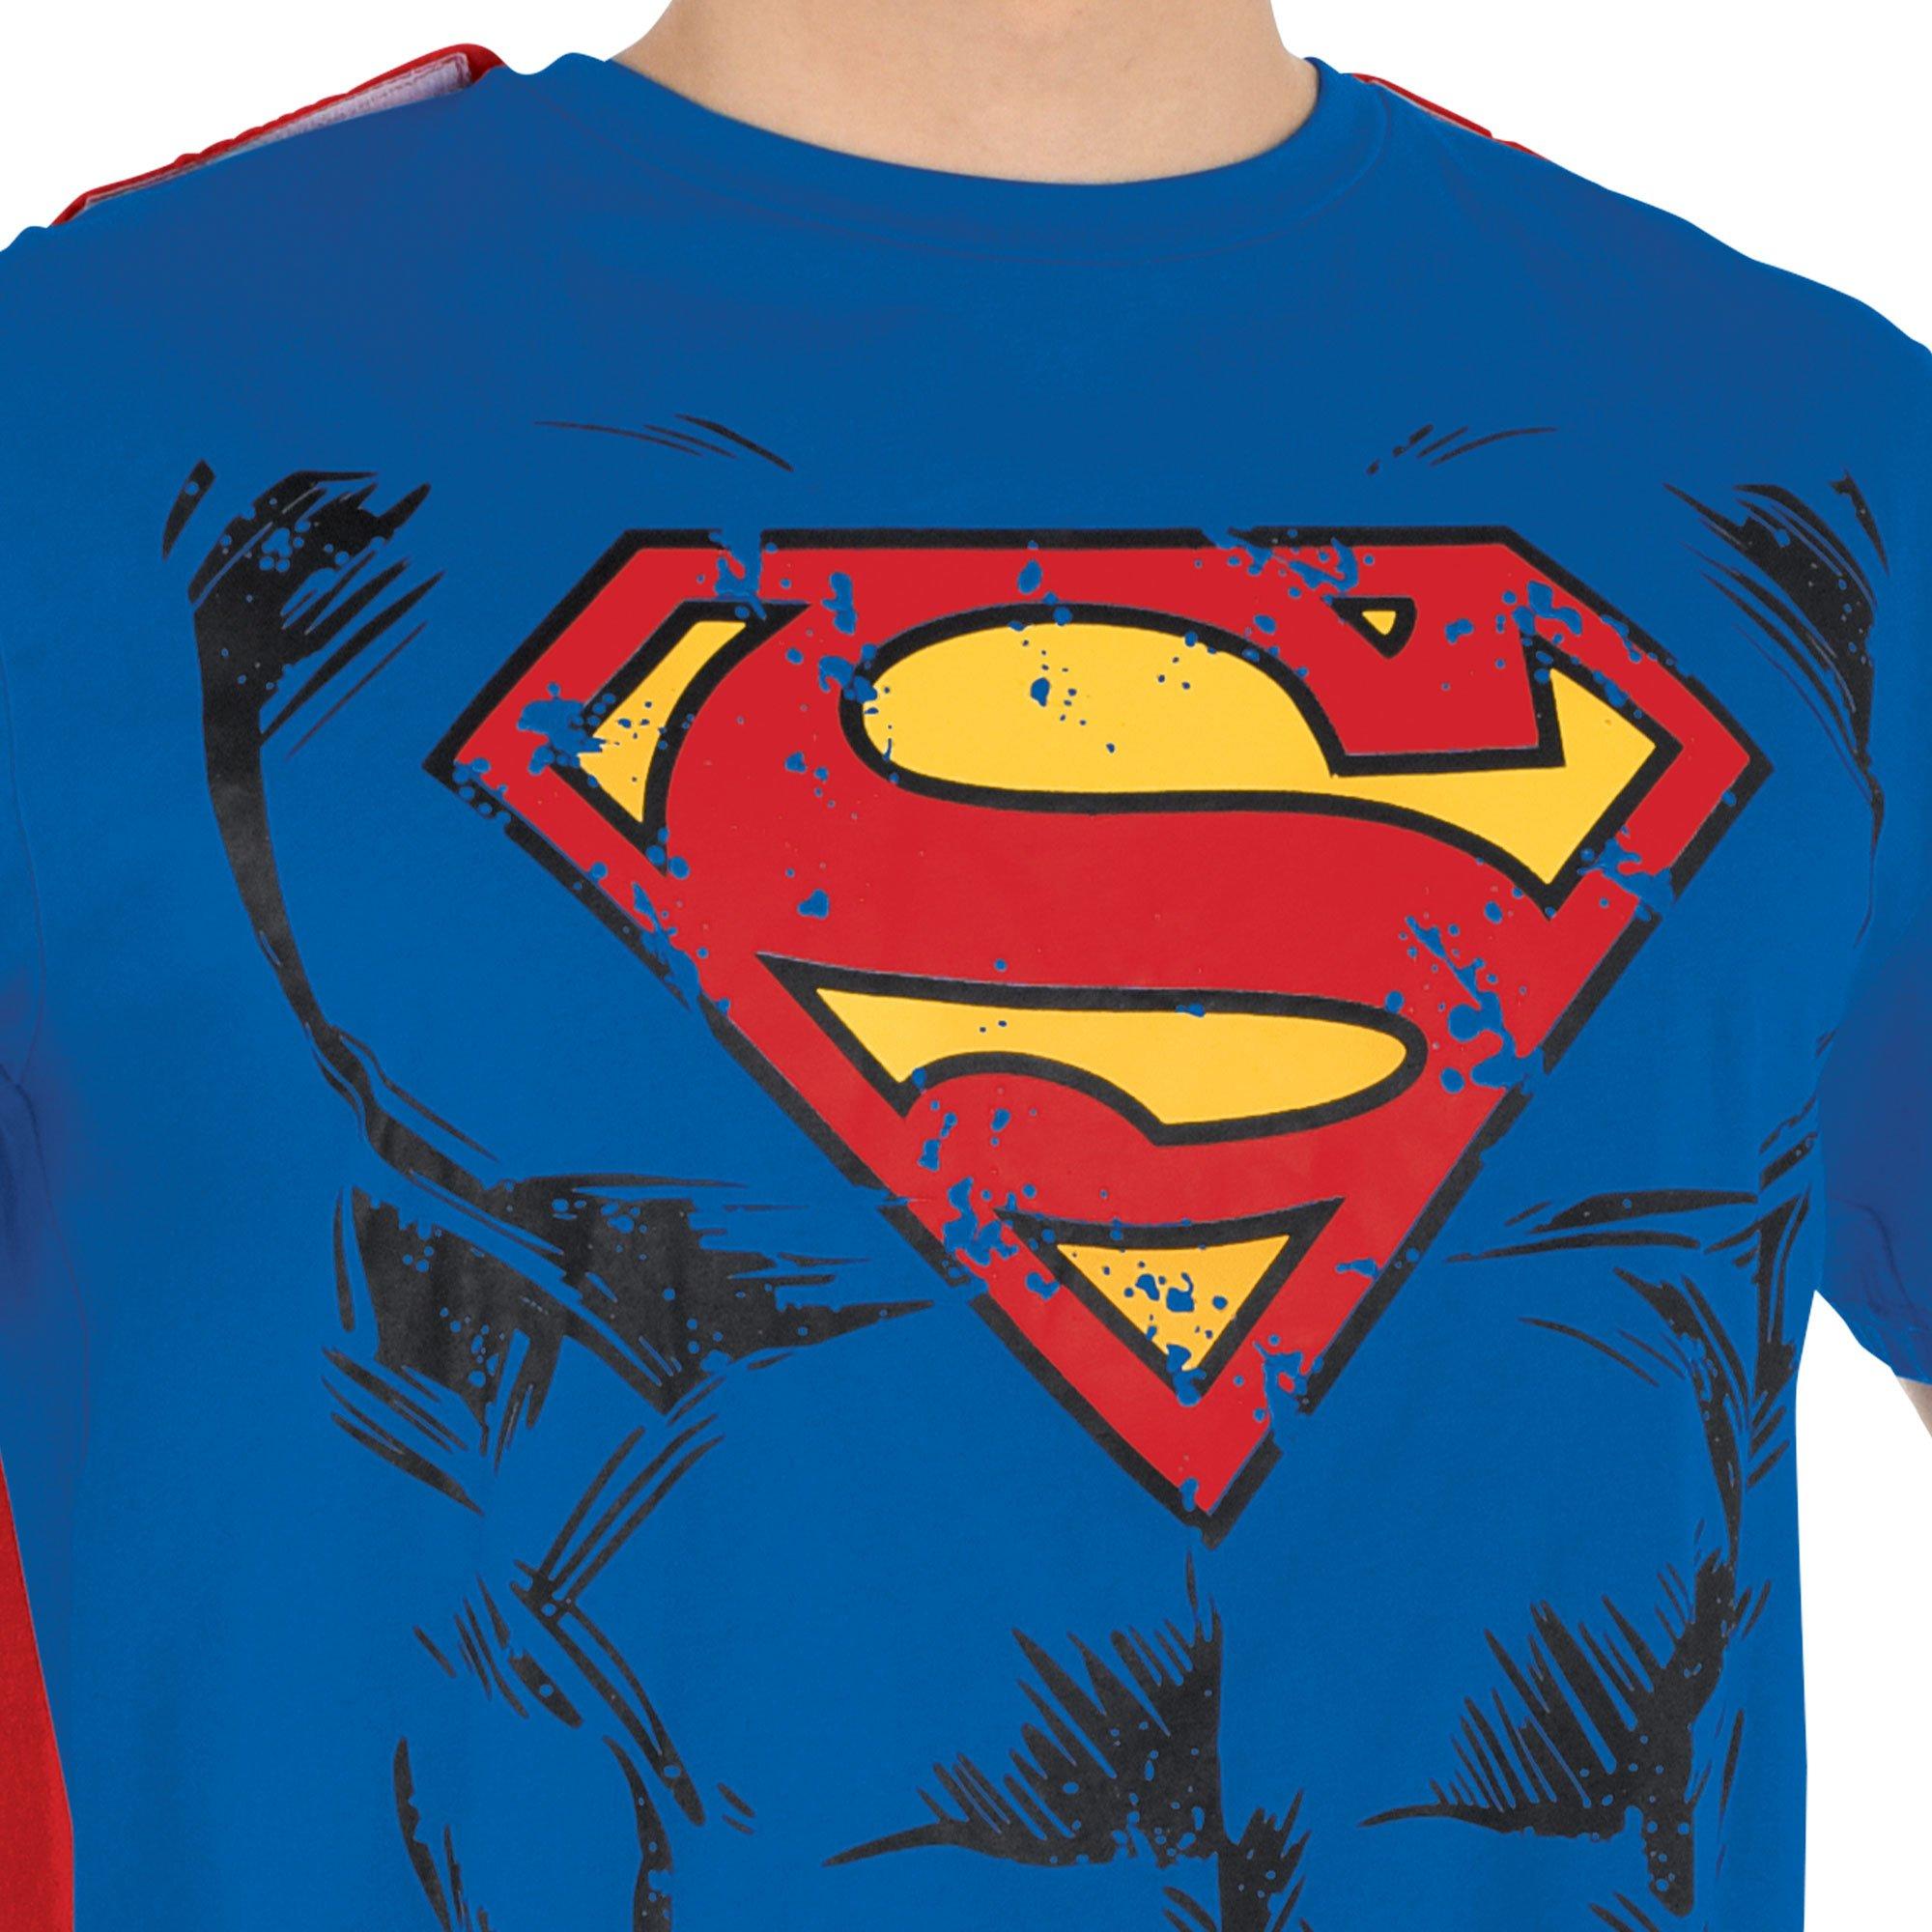 Adult Superman Costume Shirt with Cape - DC Comics